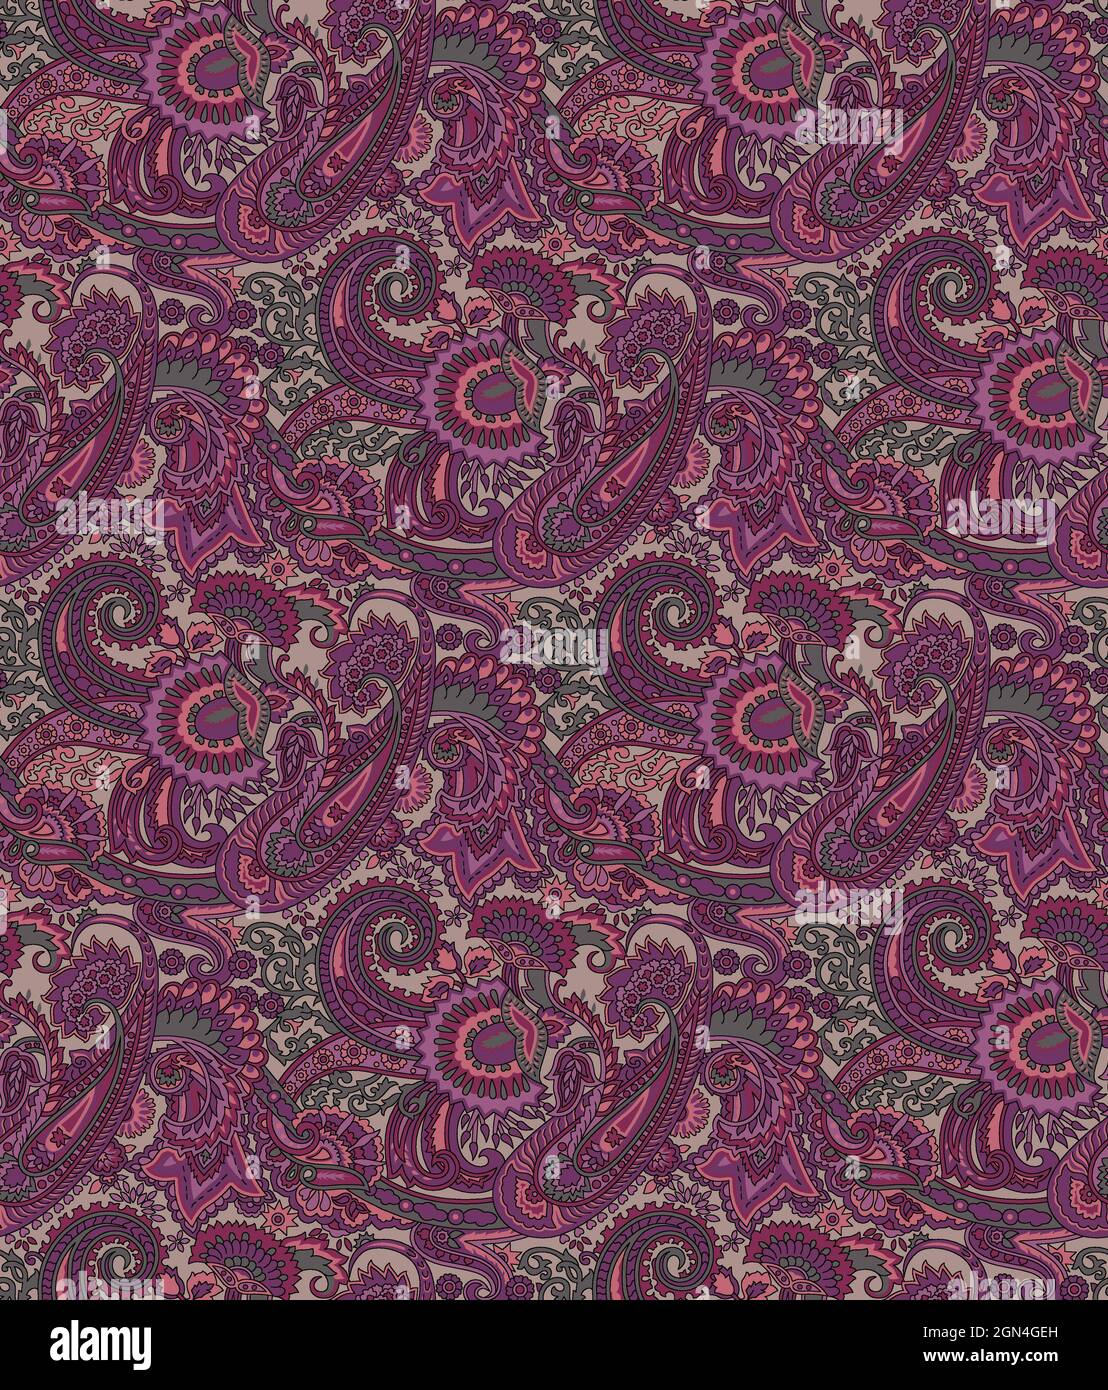 Paisley Purple Fabric, Wallpaper and Home Decor